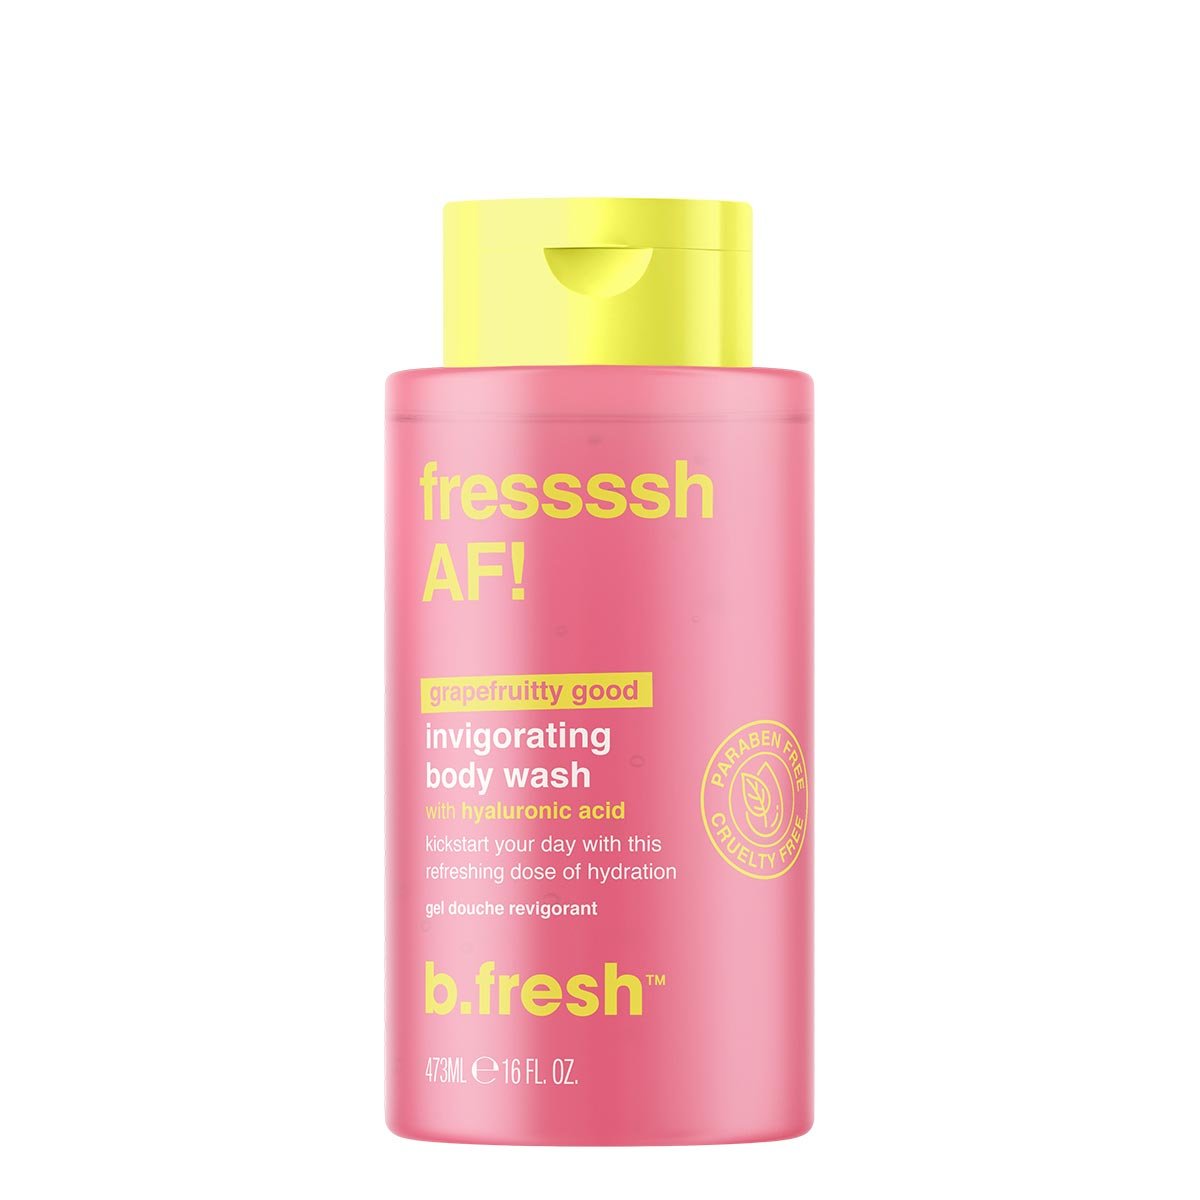 b.fresh Fressssh AF! Invigorating Body Wash 473 ml